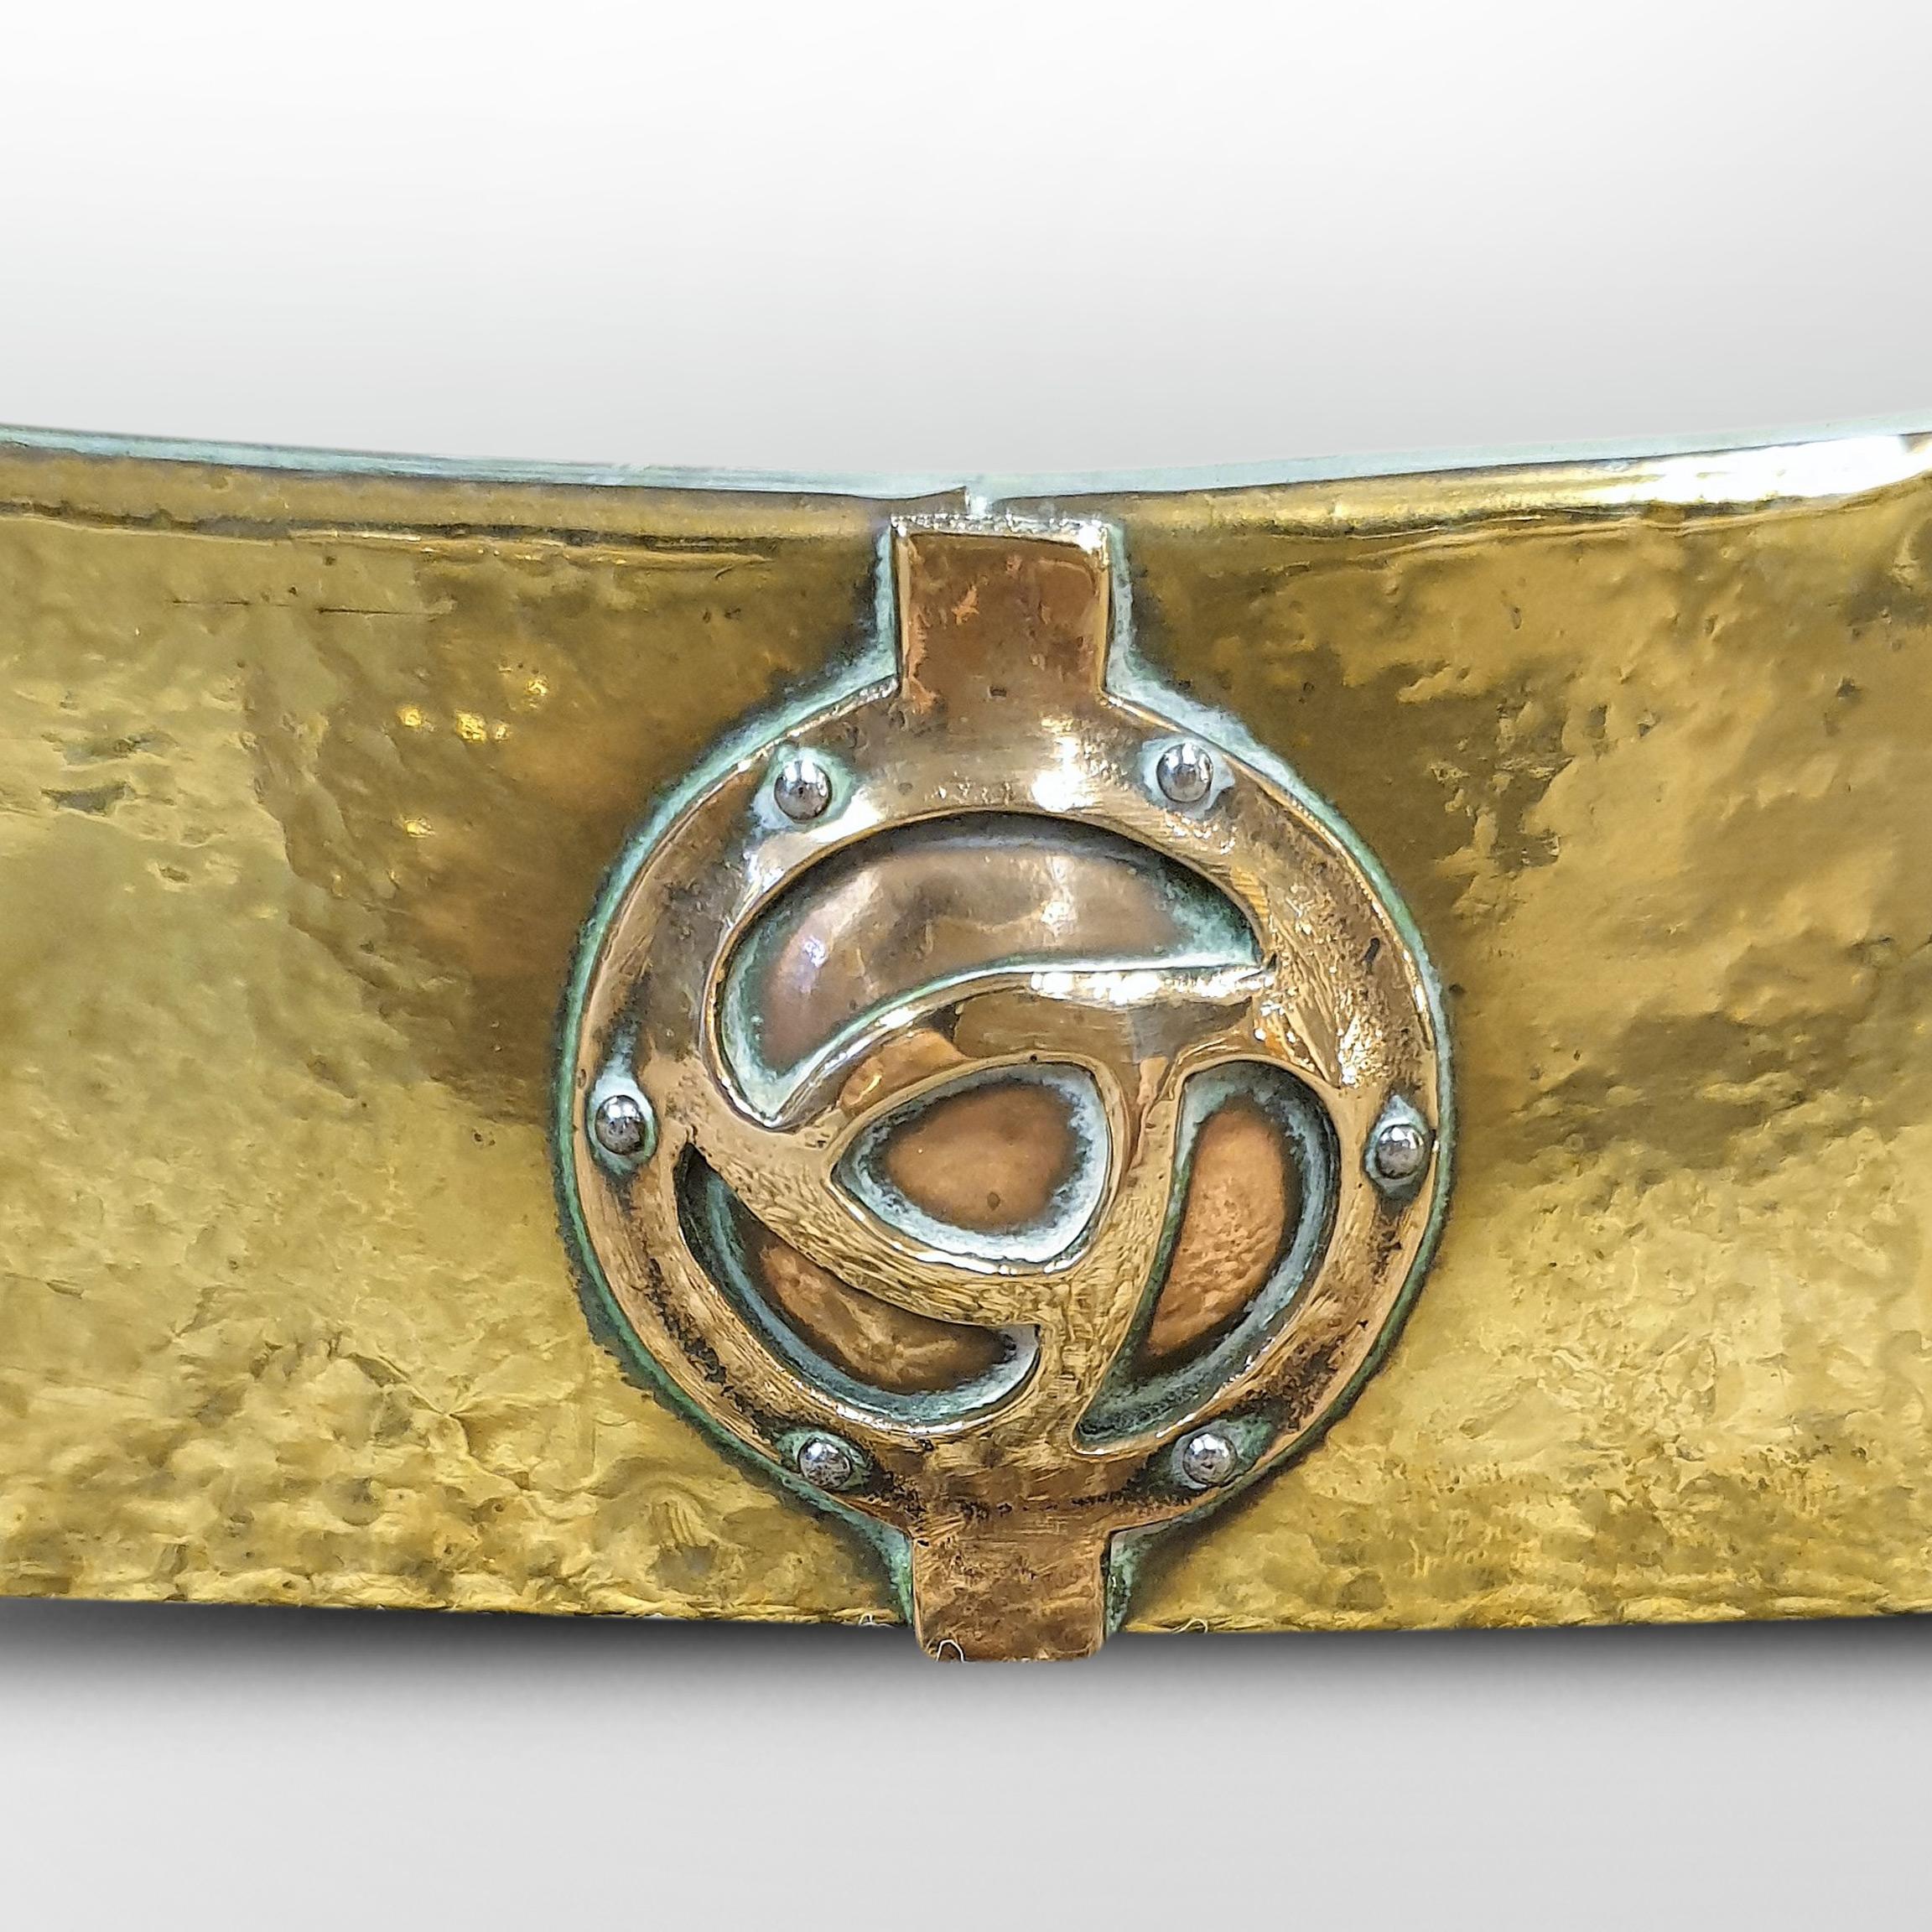 British Arts & Crafts Movement Brass Mirror with Copper Inserts